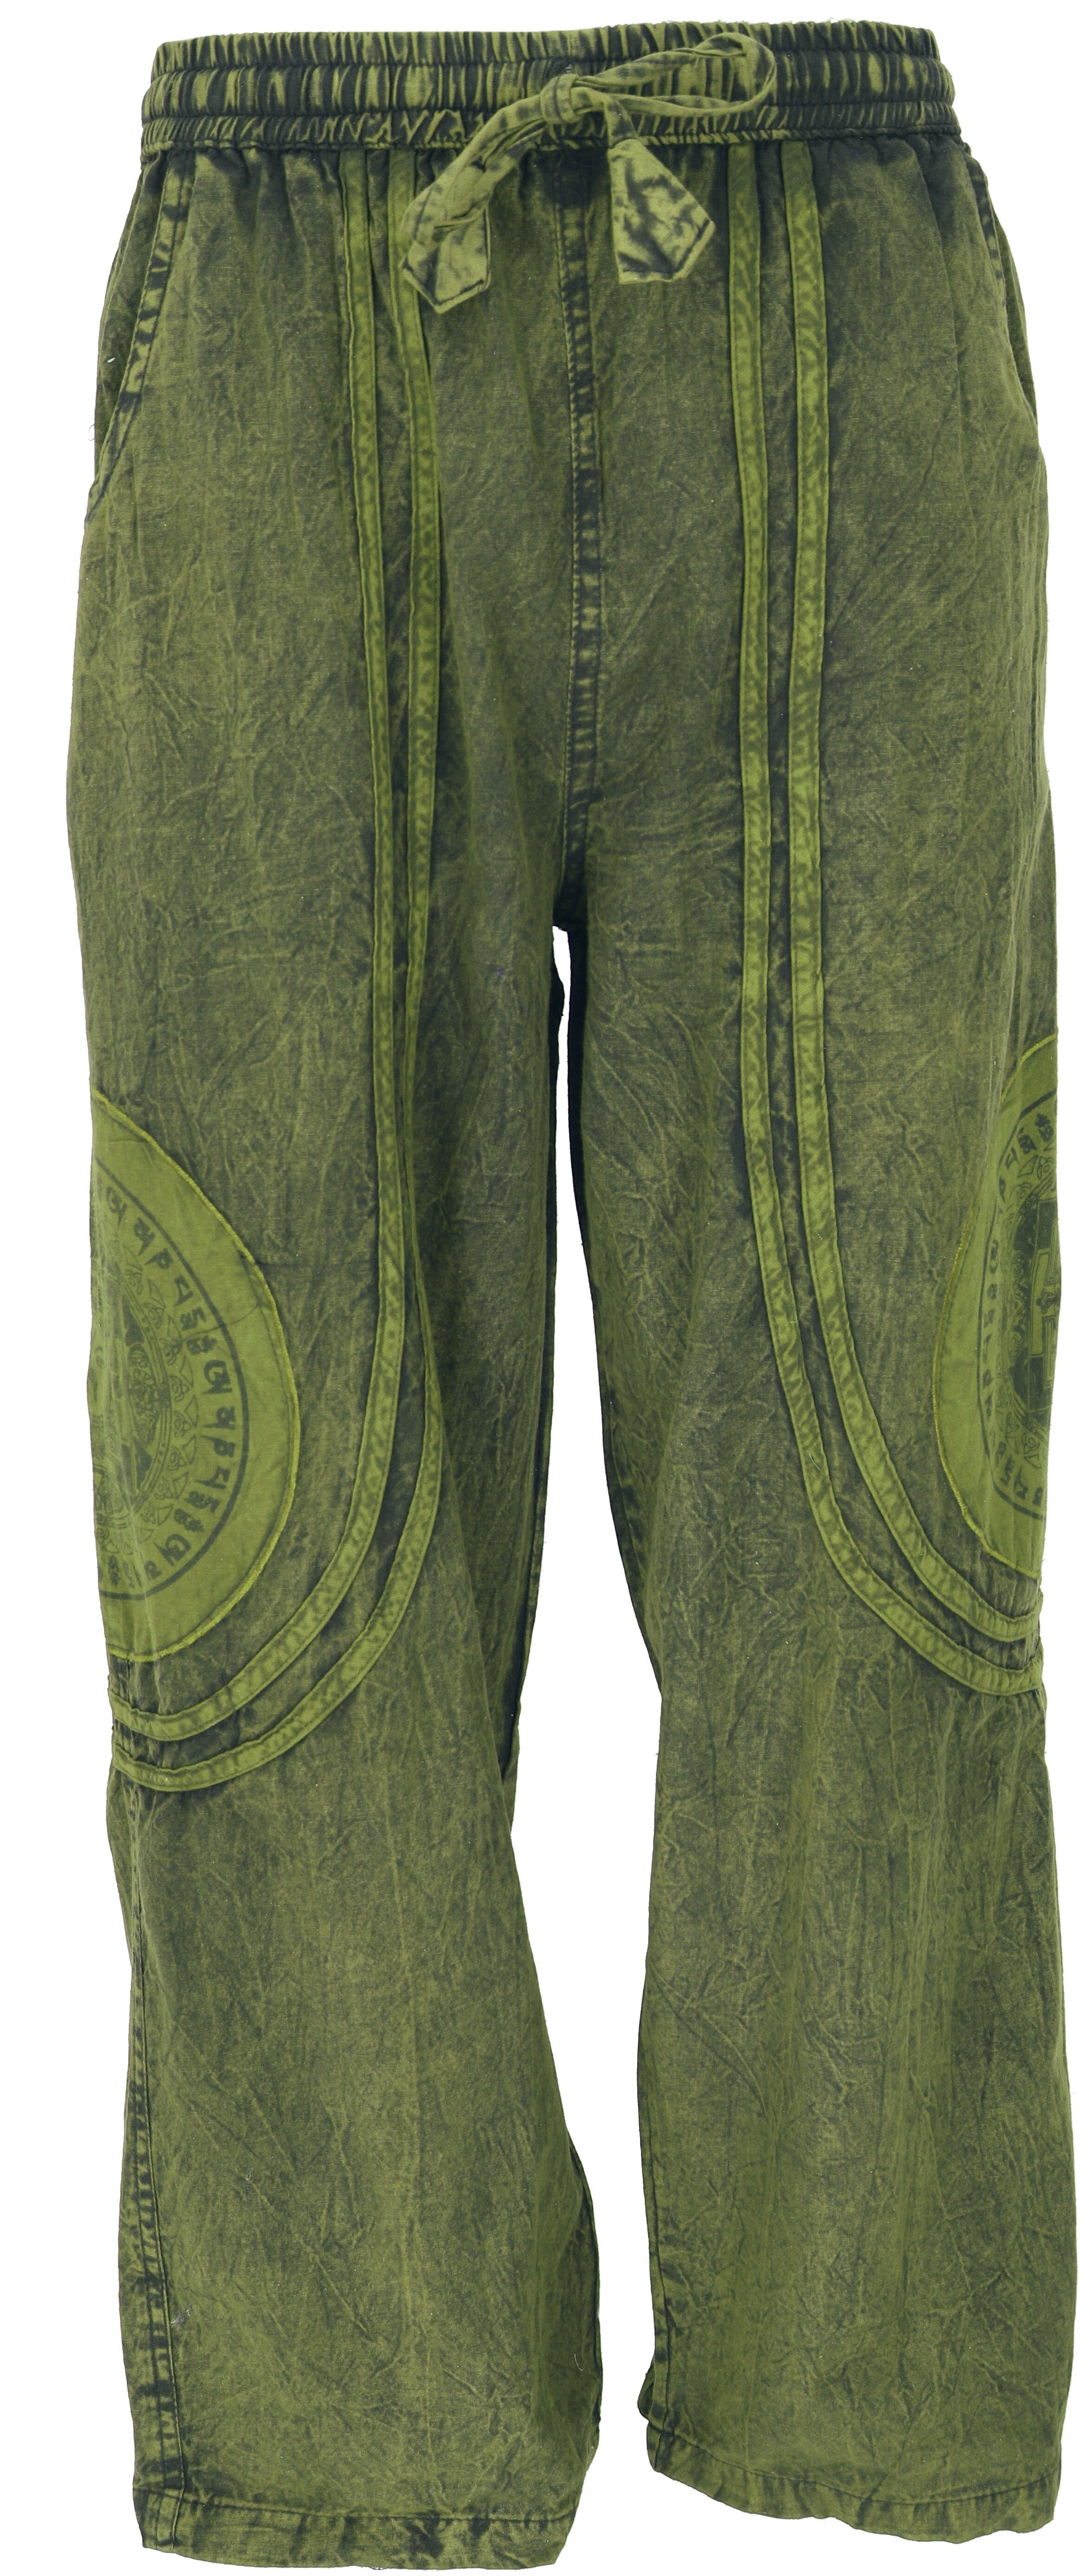 Bekleidung Ethno Yogahose, Style, alternative grün Stonewash Retro, Guru-Shop Baumwoll-Goa-Hose.. Unisex Relaxhose